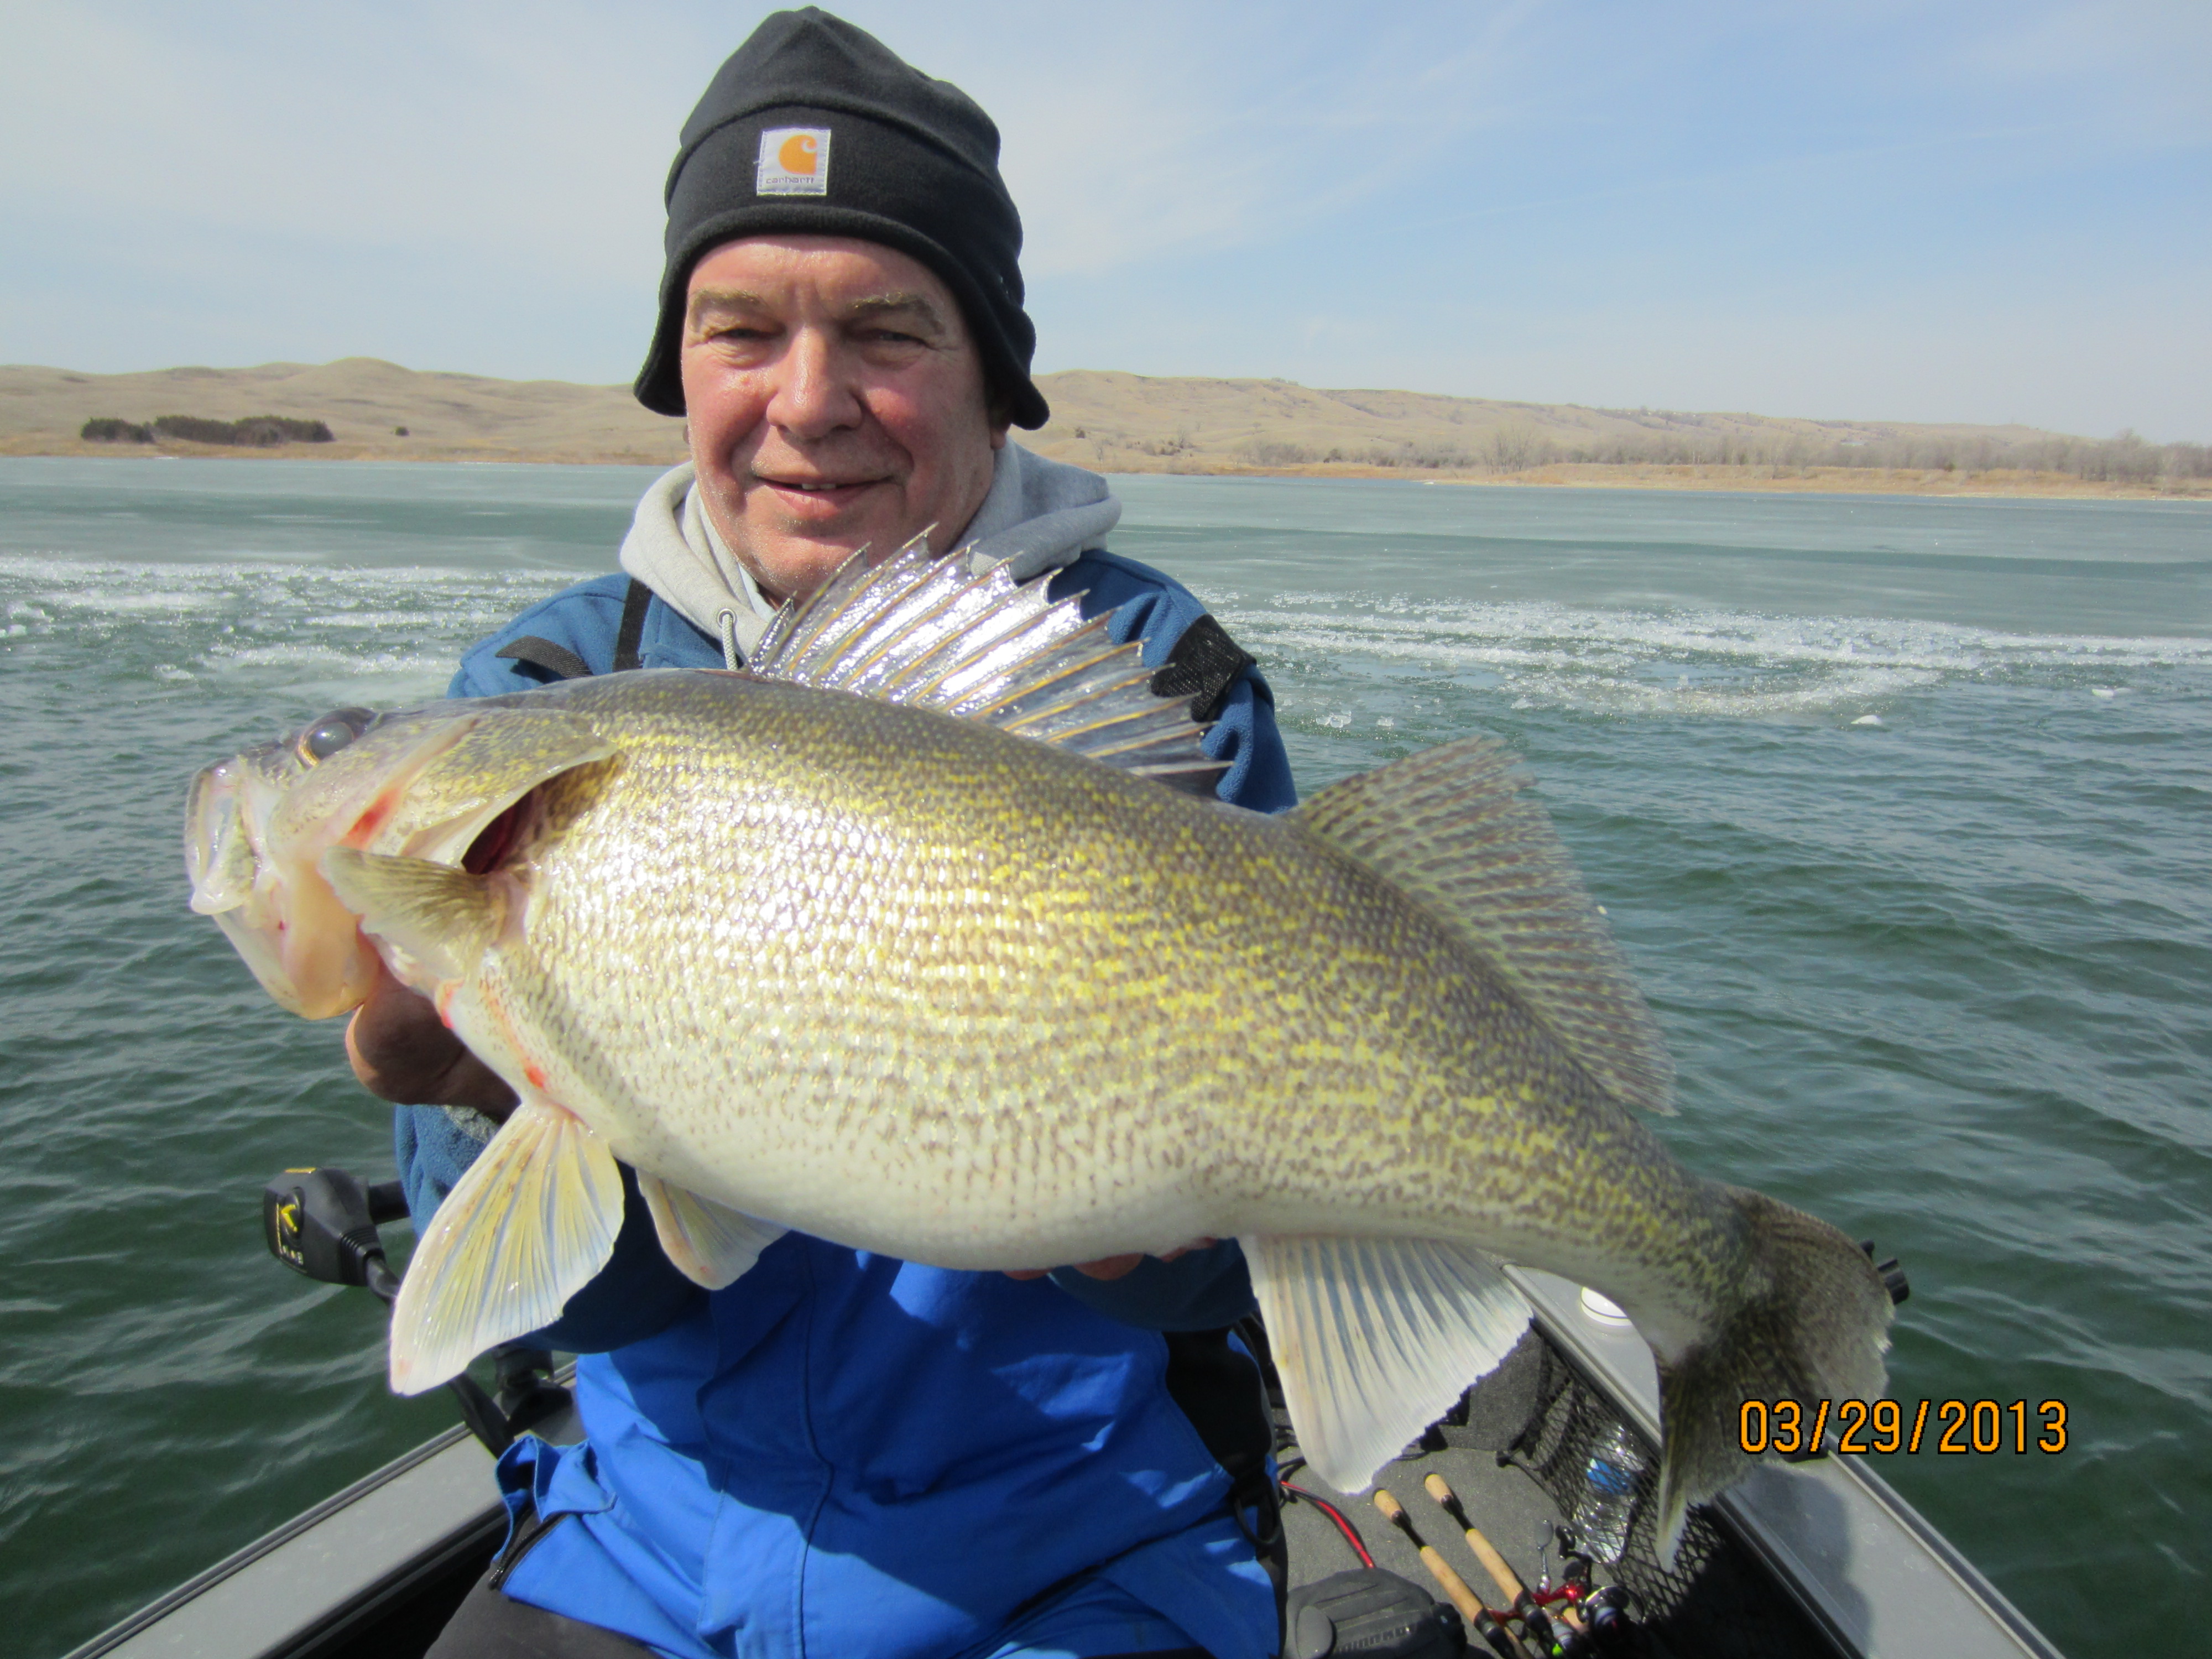 Worthy Walleye Fishing Tips for Mid-Winter